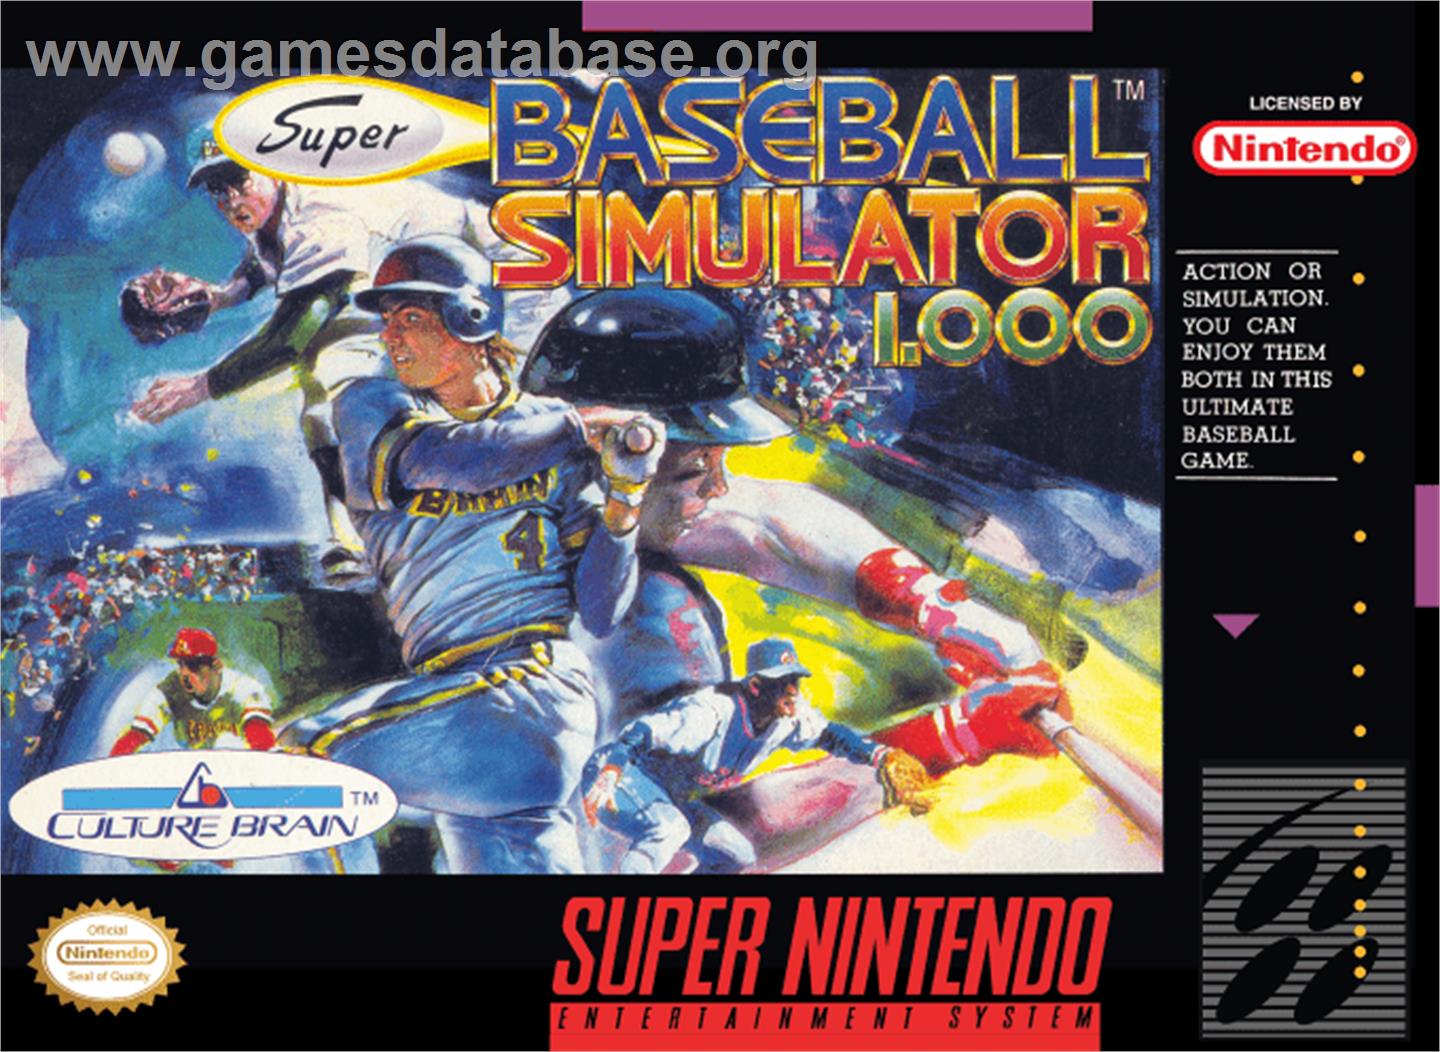 Super Baseball Simulator 1.000 - Nintendo SNES - Artwork - Box